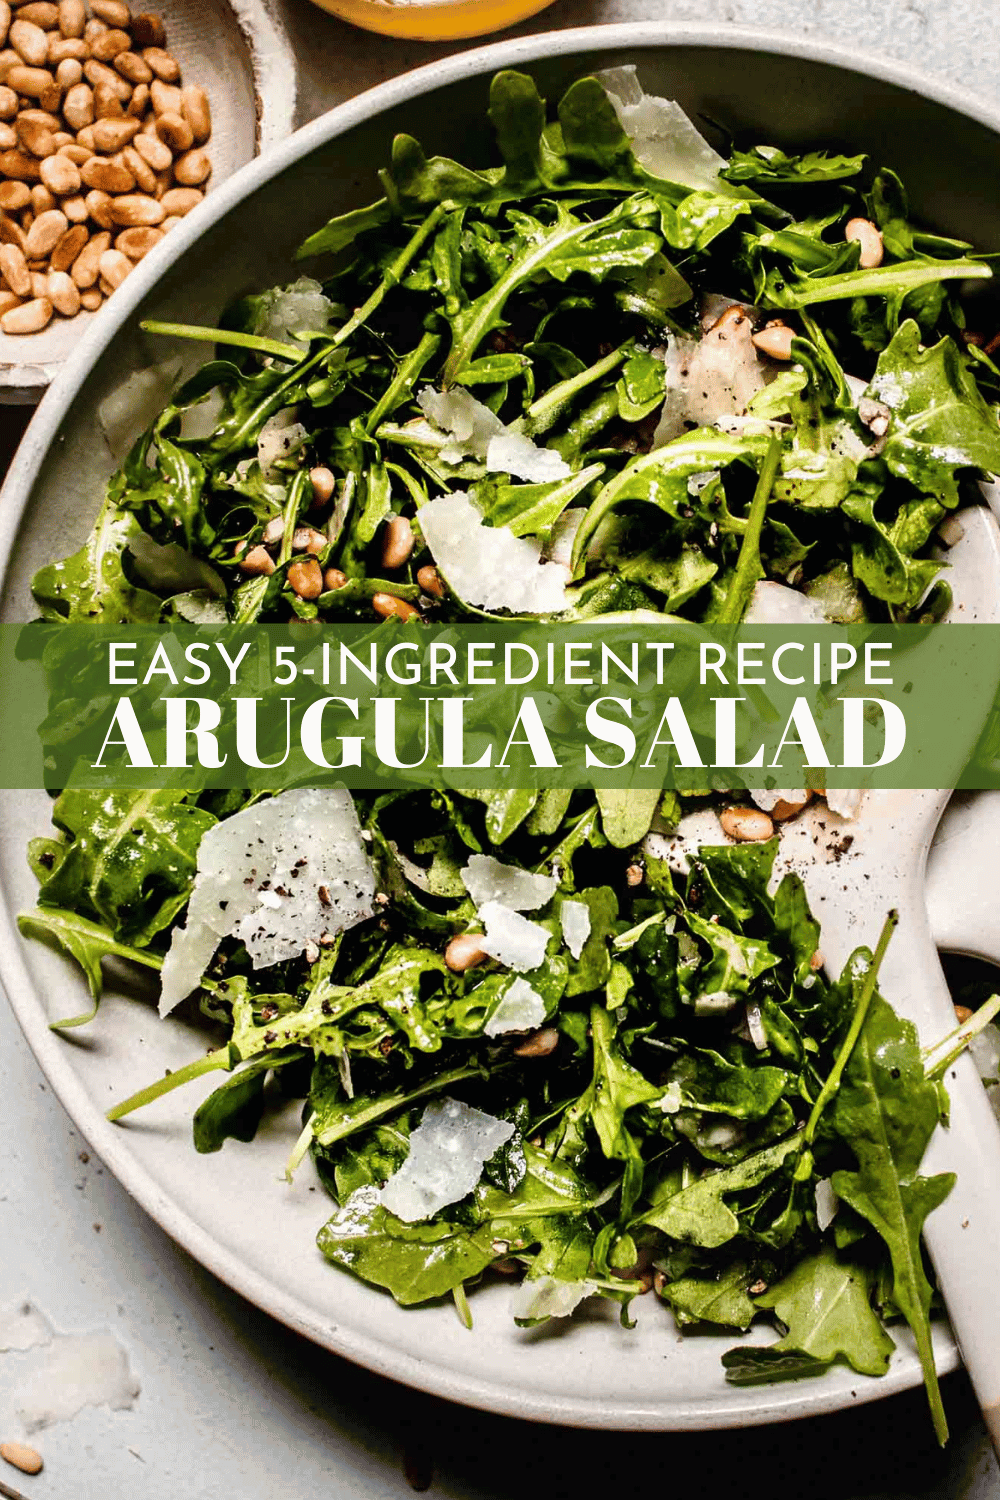 Simple Arugula Salad Dressing Recipe (Only 5-Ingredients!)